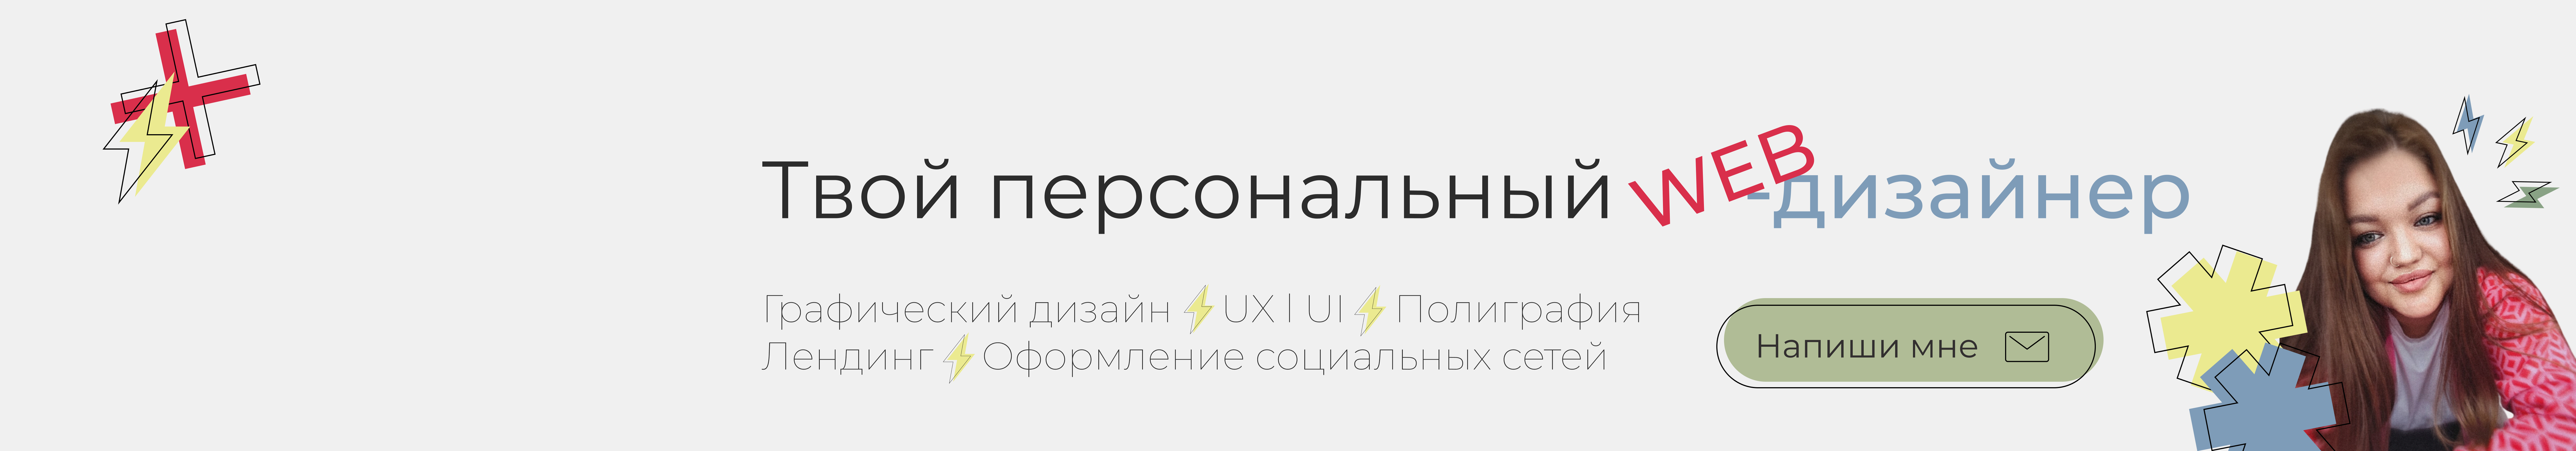 Ася Стрельникова's profile banner